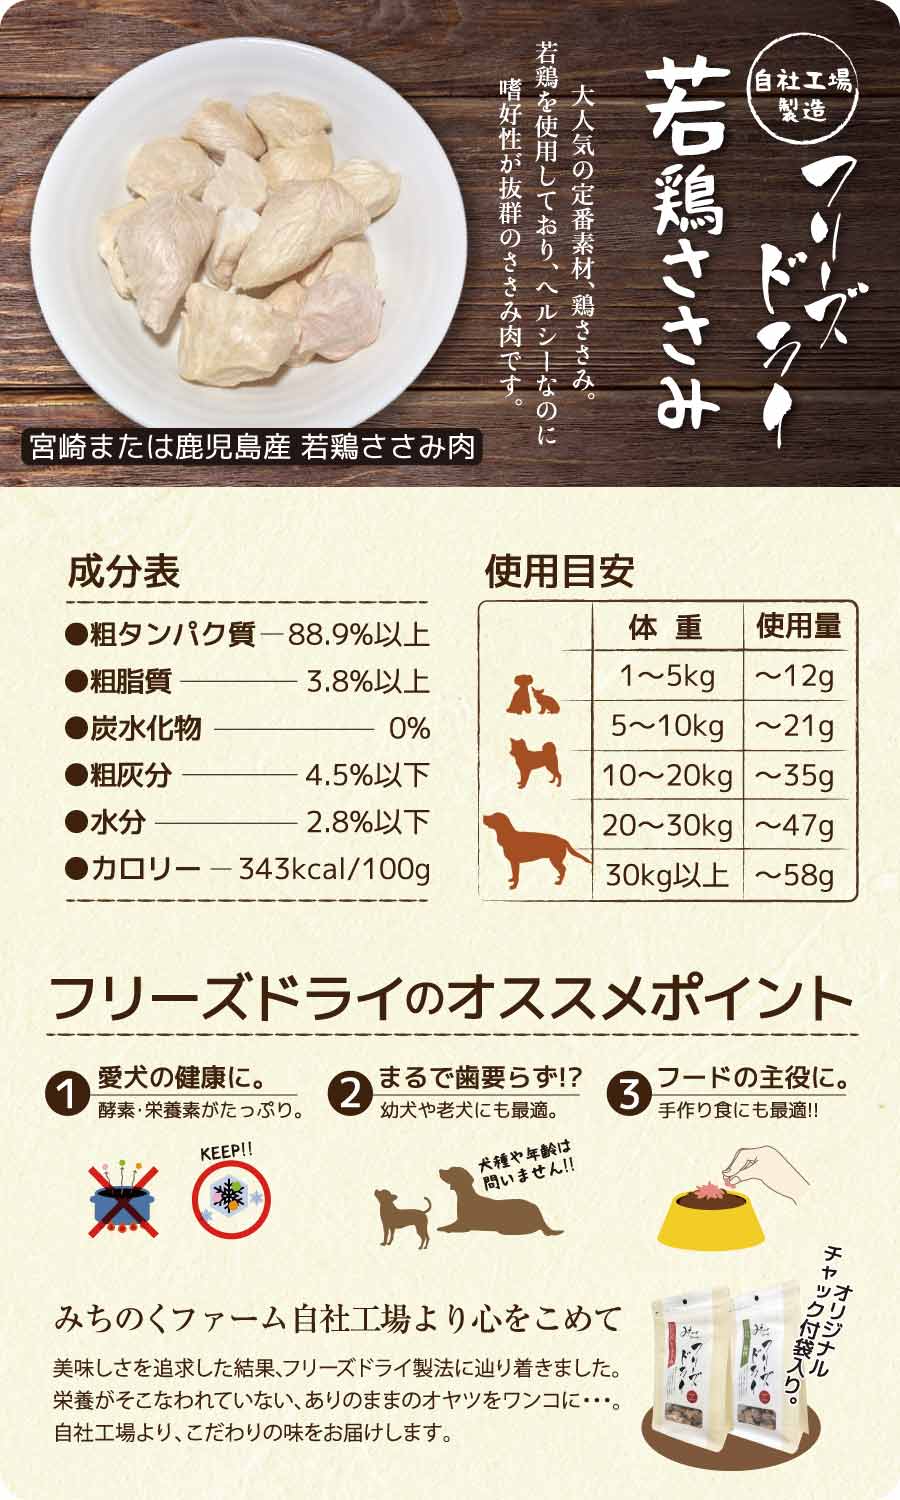 Freeze Dried Japanese Chicken Fillet 60g